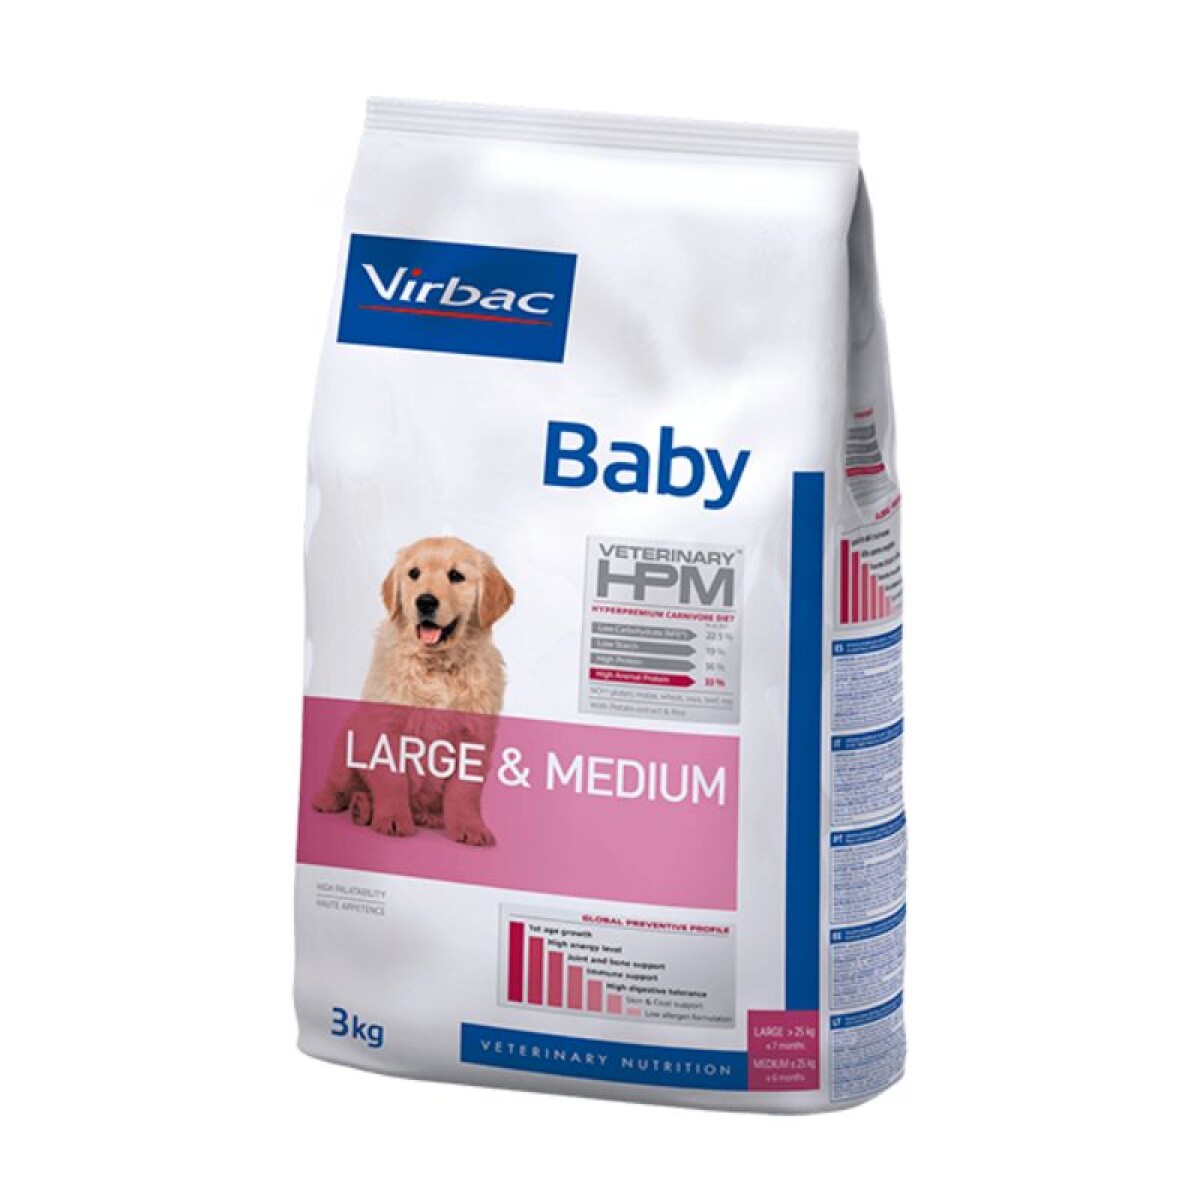 HPM BABY DOG SPECIAL MEDIUM 3 KG - Hpm Baby Dog Special Medium 3 Kg 